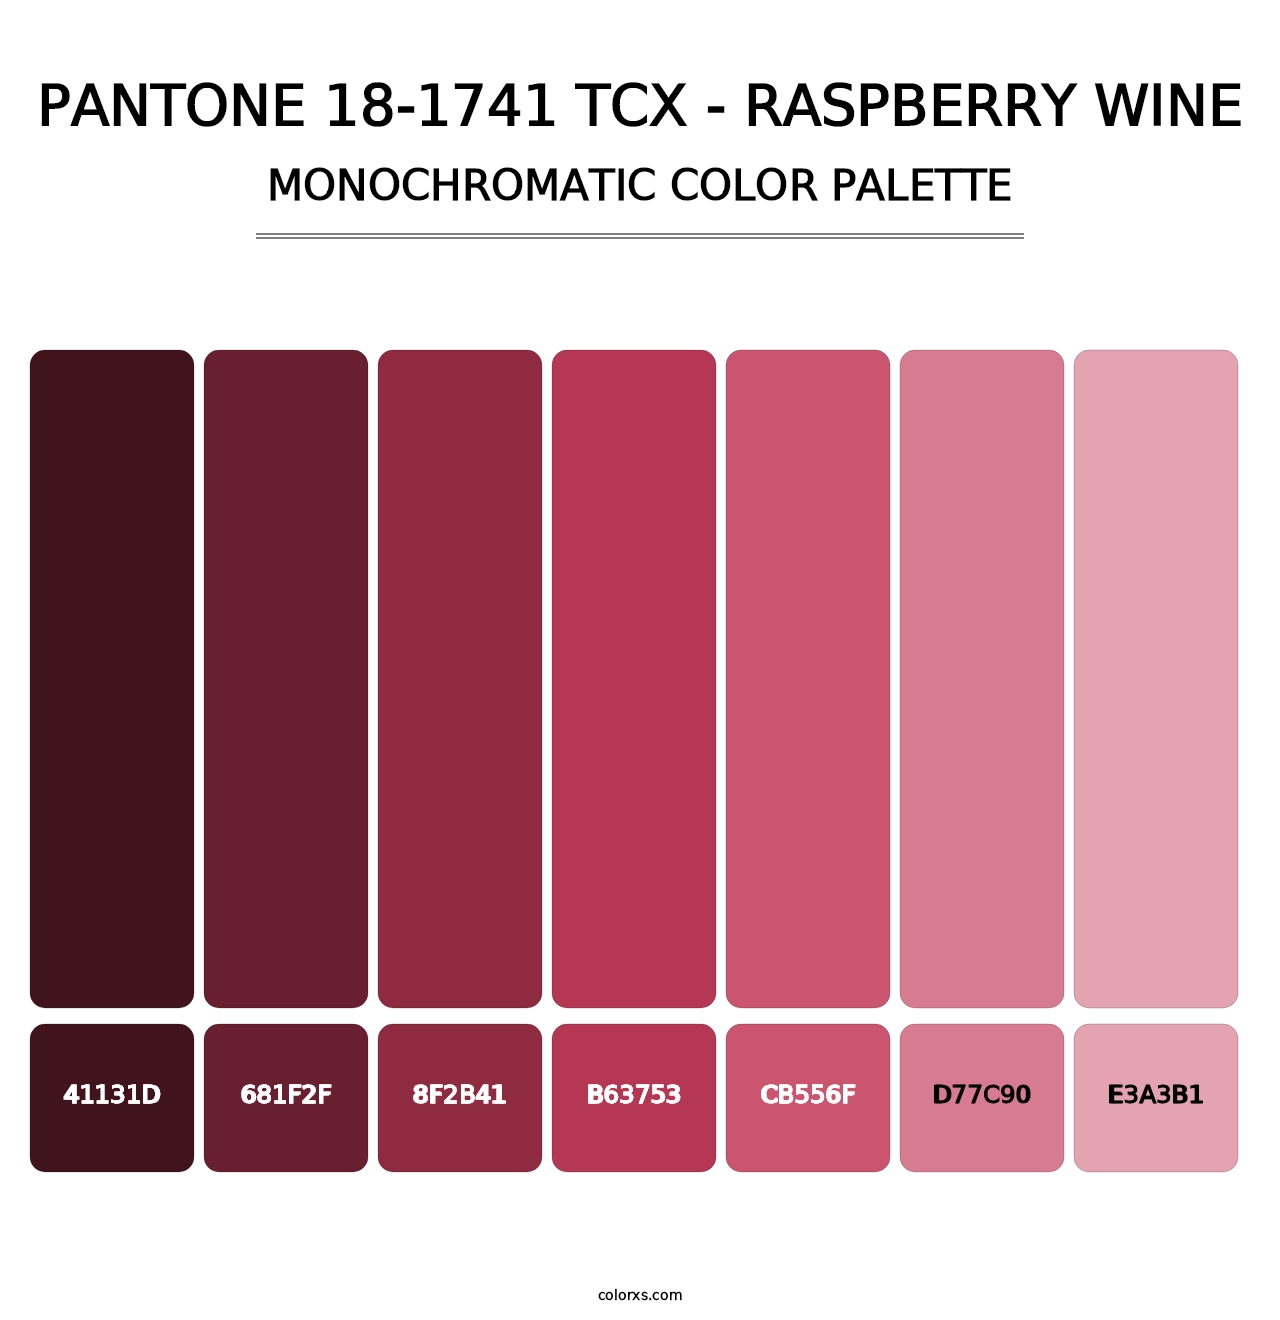 PANTONE 18-1741 TCX - Raspberry Wine - Monochromatic Color Palette